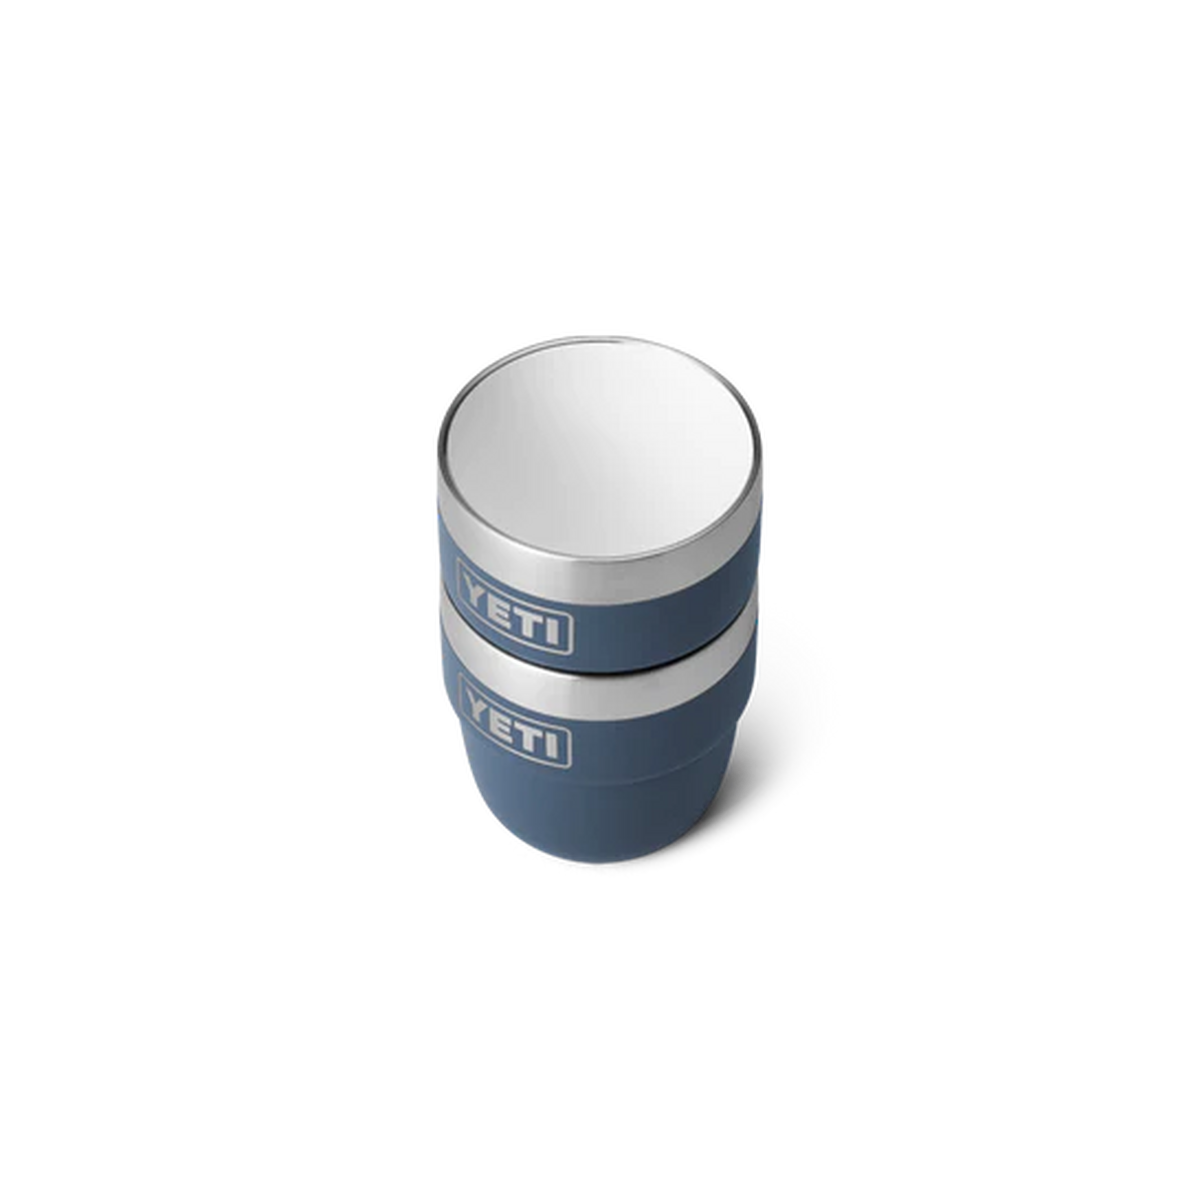 Yeti Rambler 118ml Espresso Cups 2-Pack - Navy